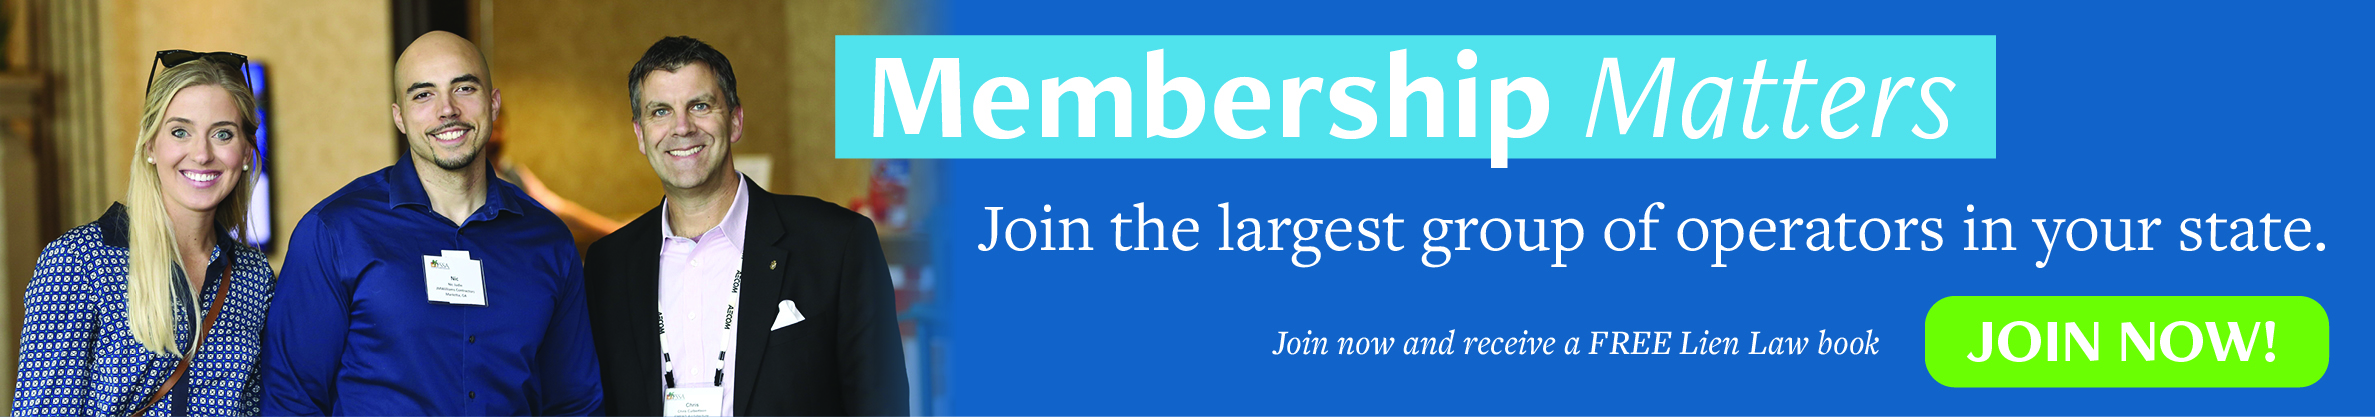 Ncssa Membership Banner 1140x200